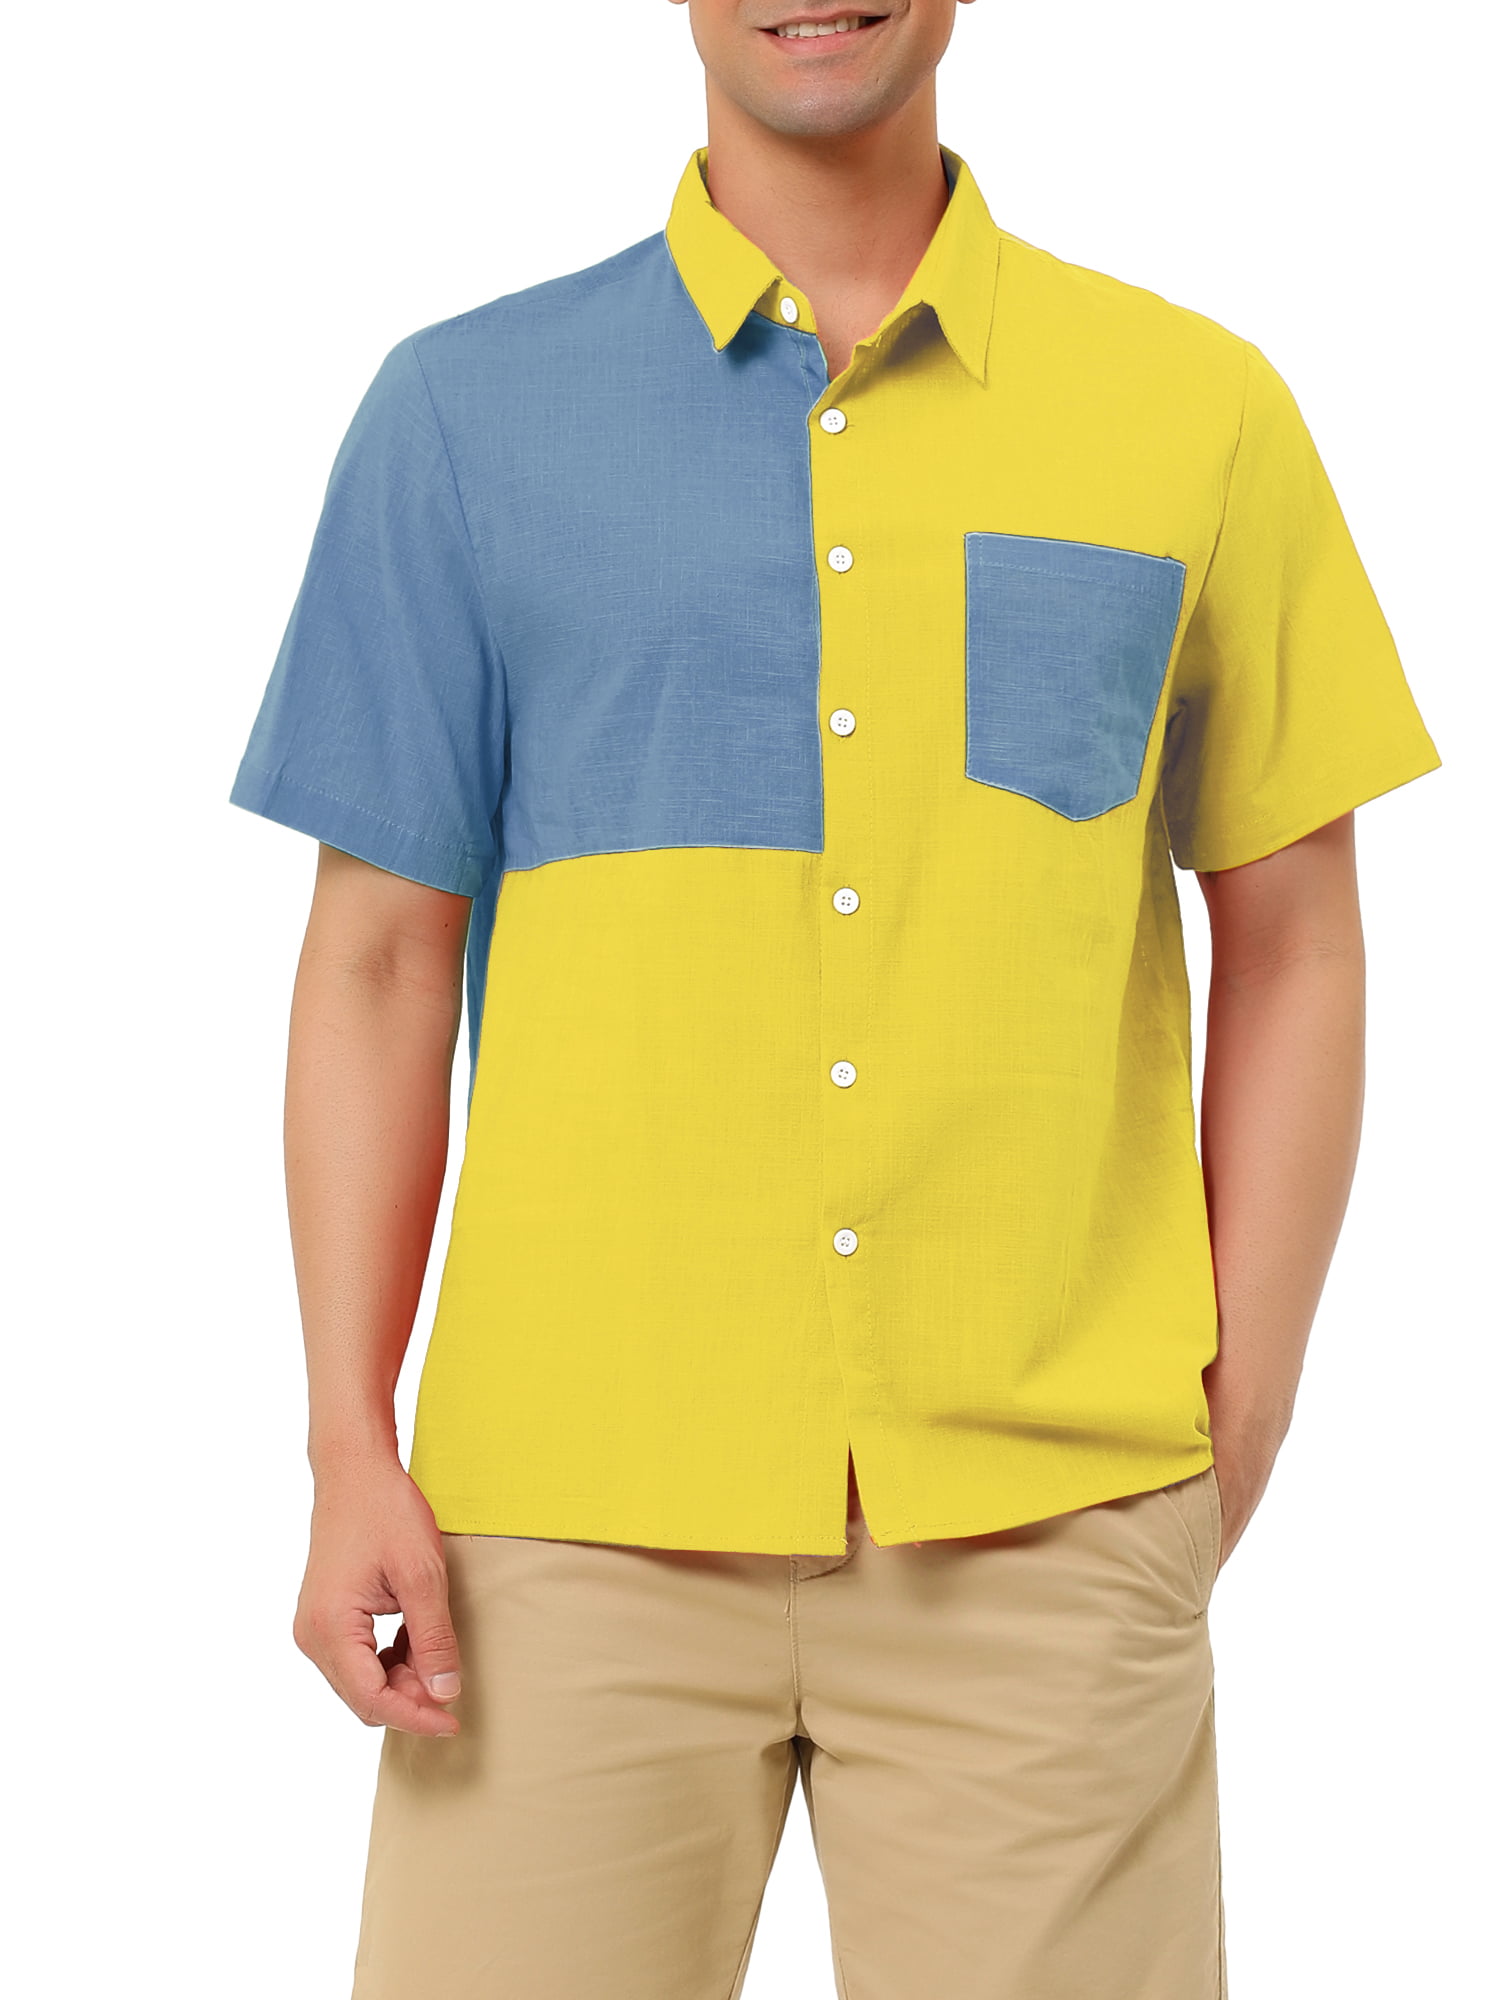 Men Shirts Patchwork Rockabilly Bowling Shirt Summer Plus Size Cotton Workout